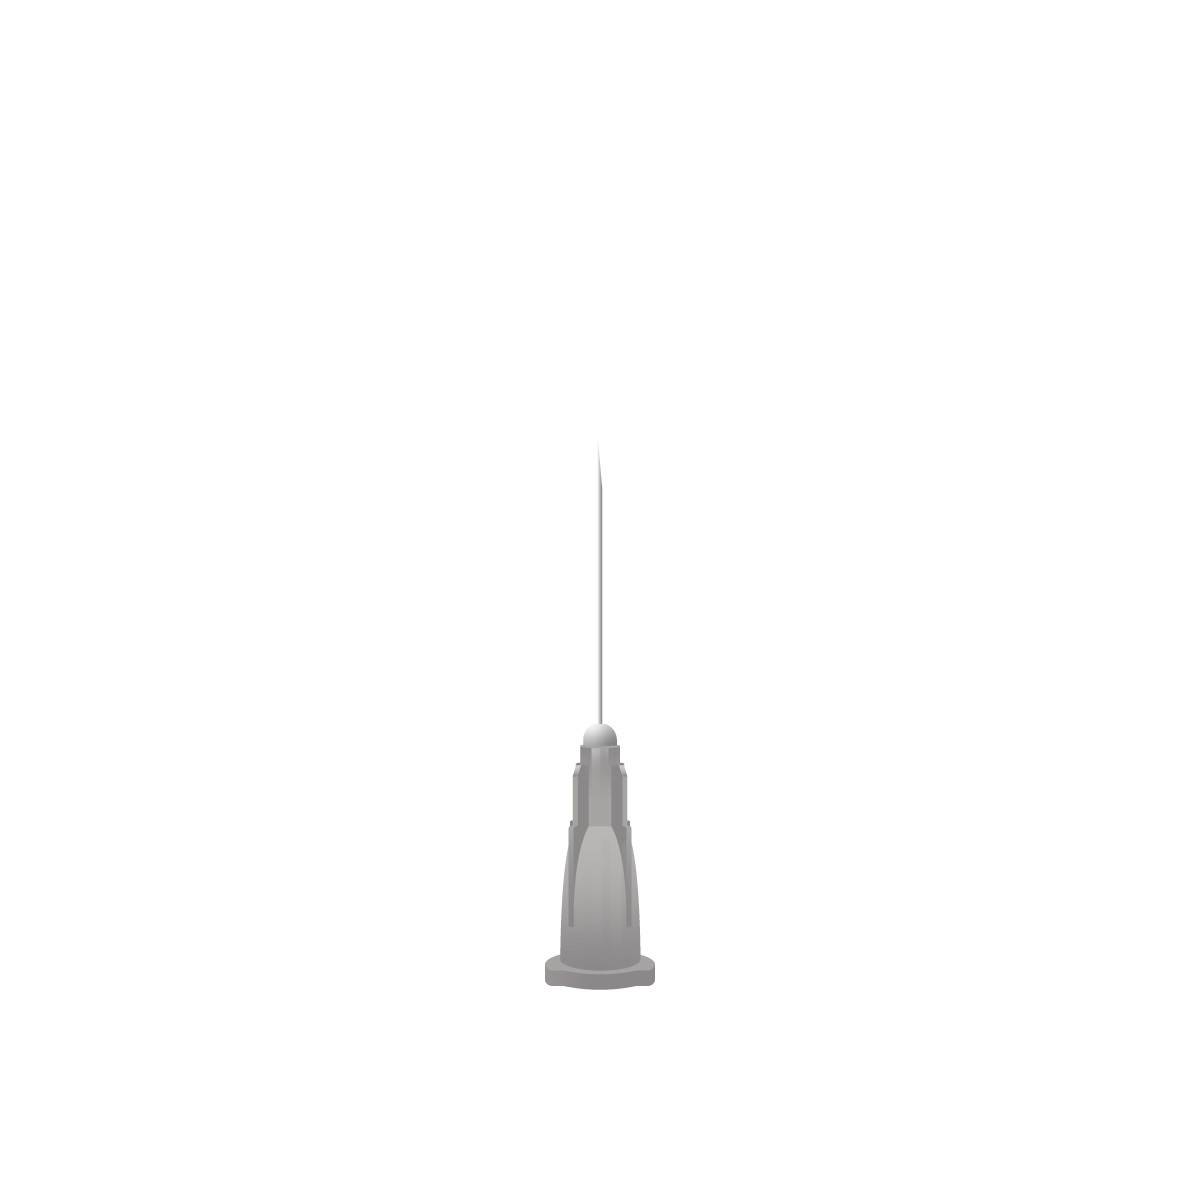 27g Grey 3/4 inch BBraun Sterican Needles (0.4mm x 20mm)